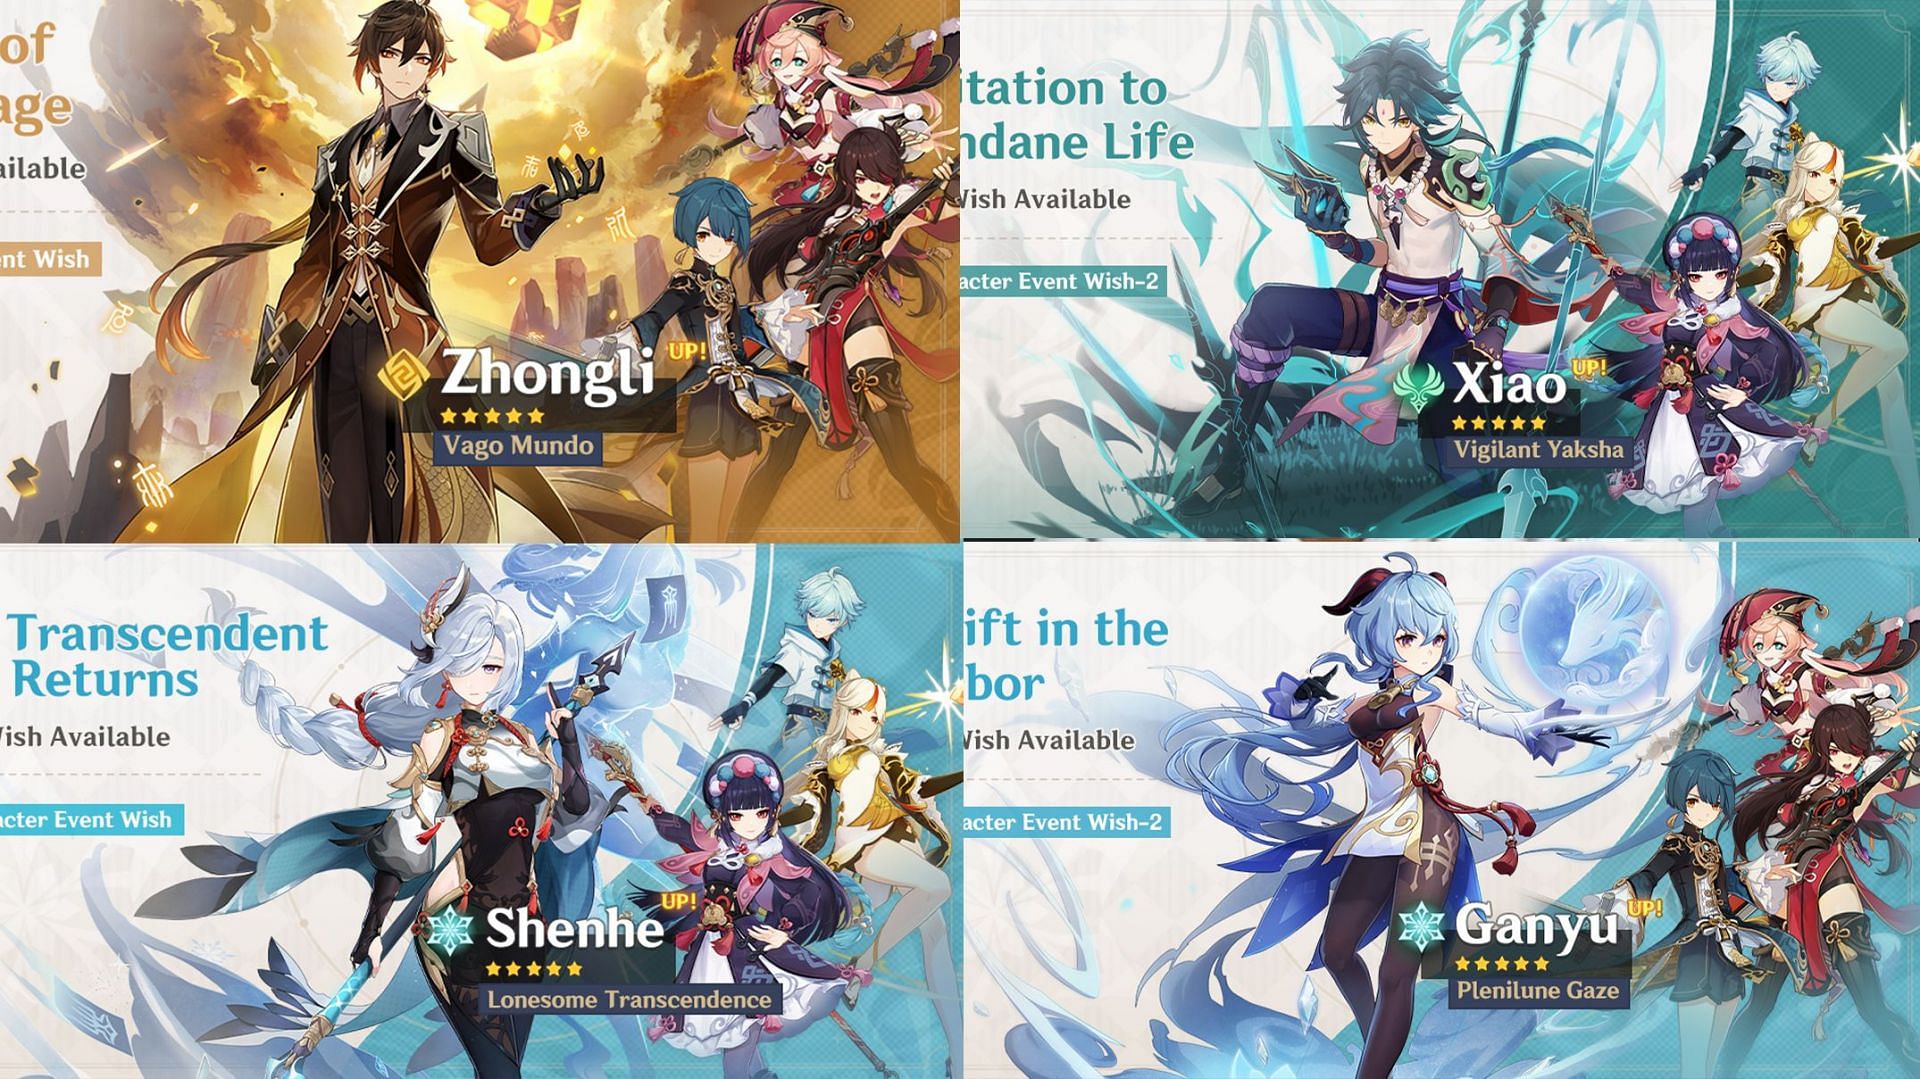 All event banners for Genshin Impact version 2.4 (Image via Genshin Impact)